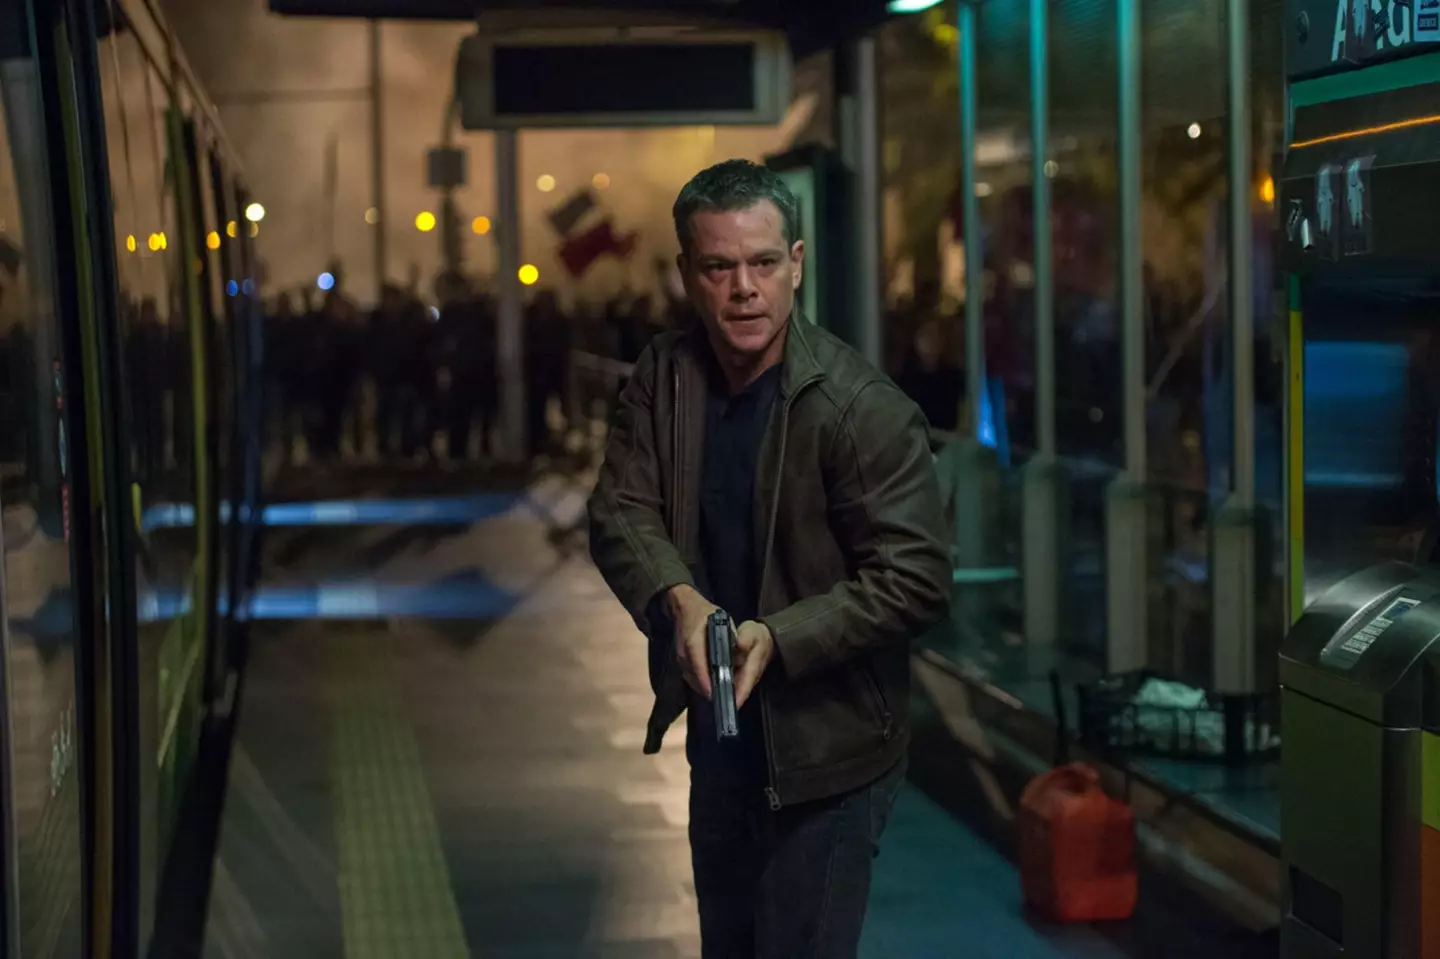 Damon once called the original script of The Bourne Ultimatum "unreadable".